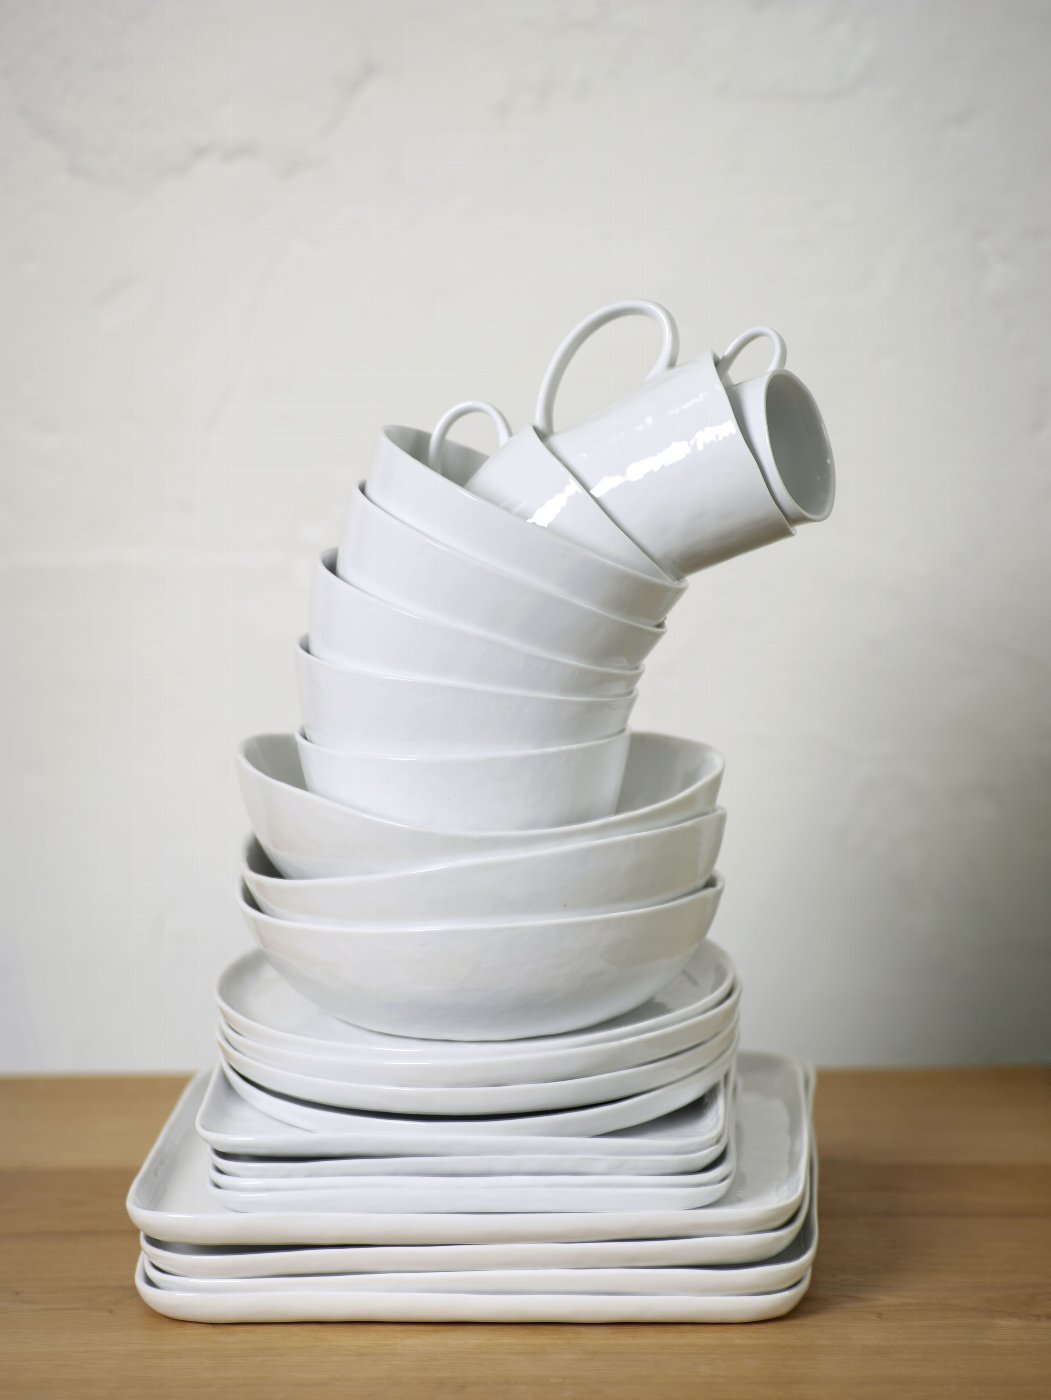 Piana plate, round porcelain, white Dia 27 cm